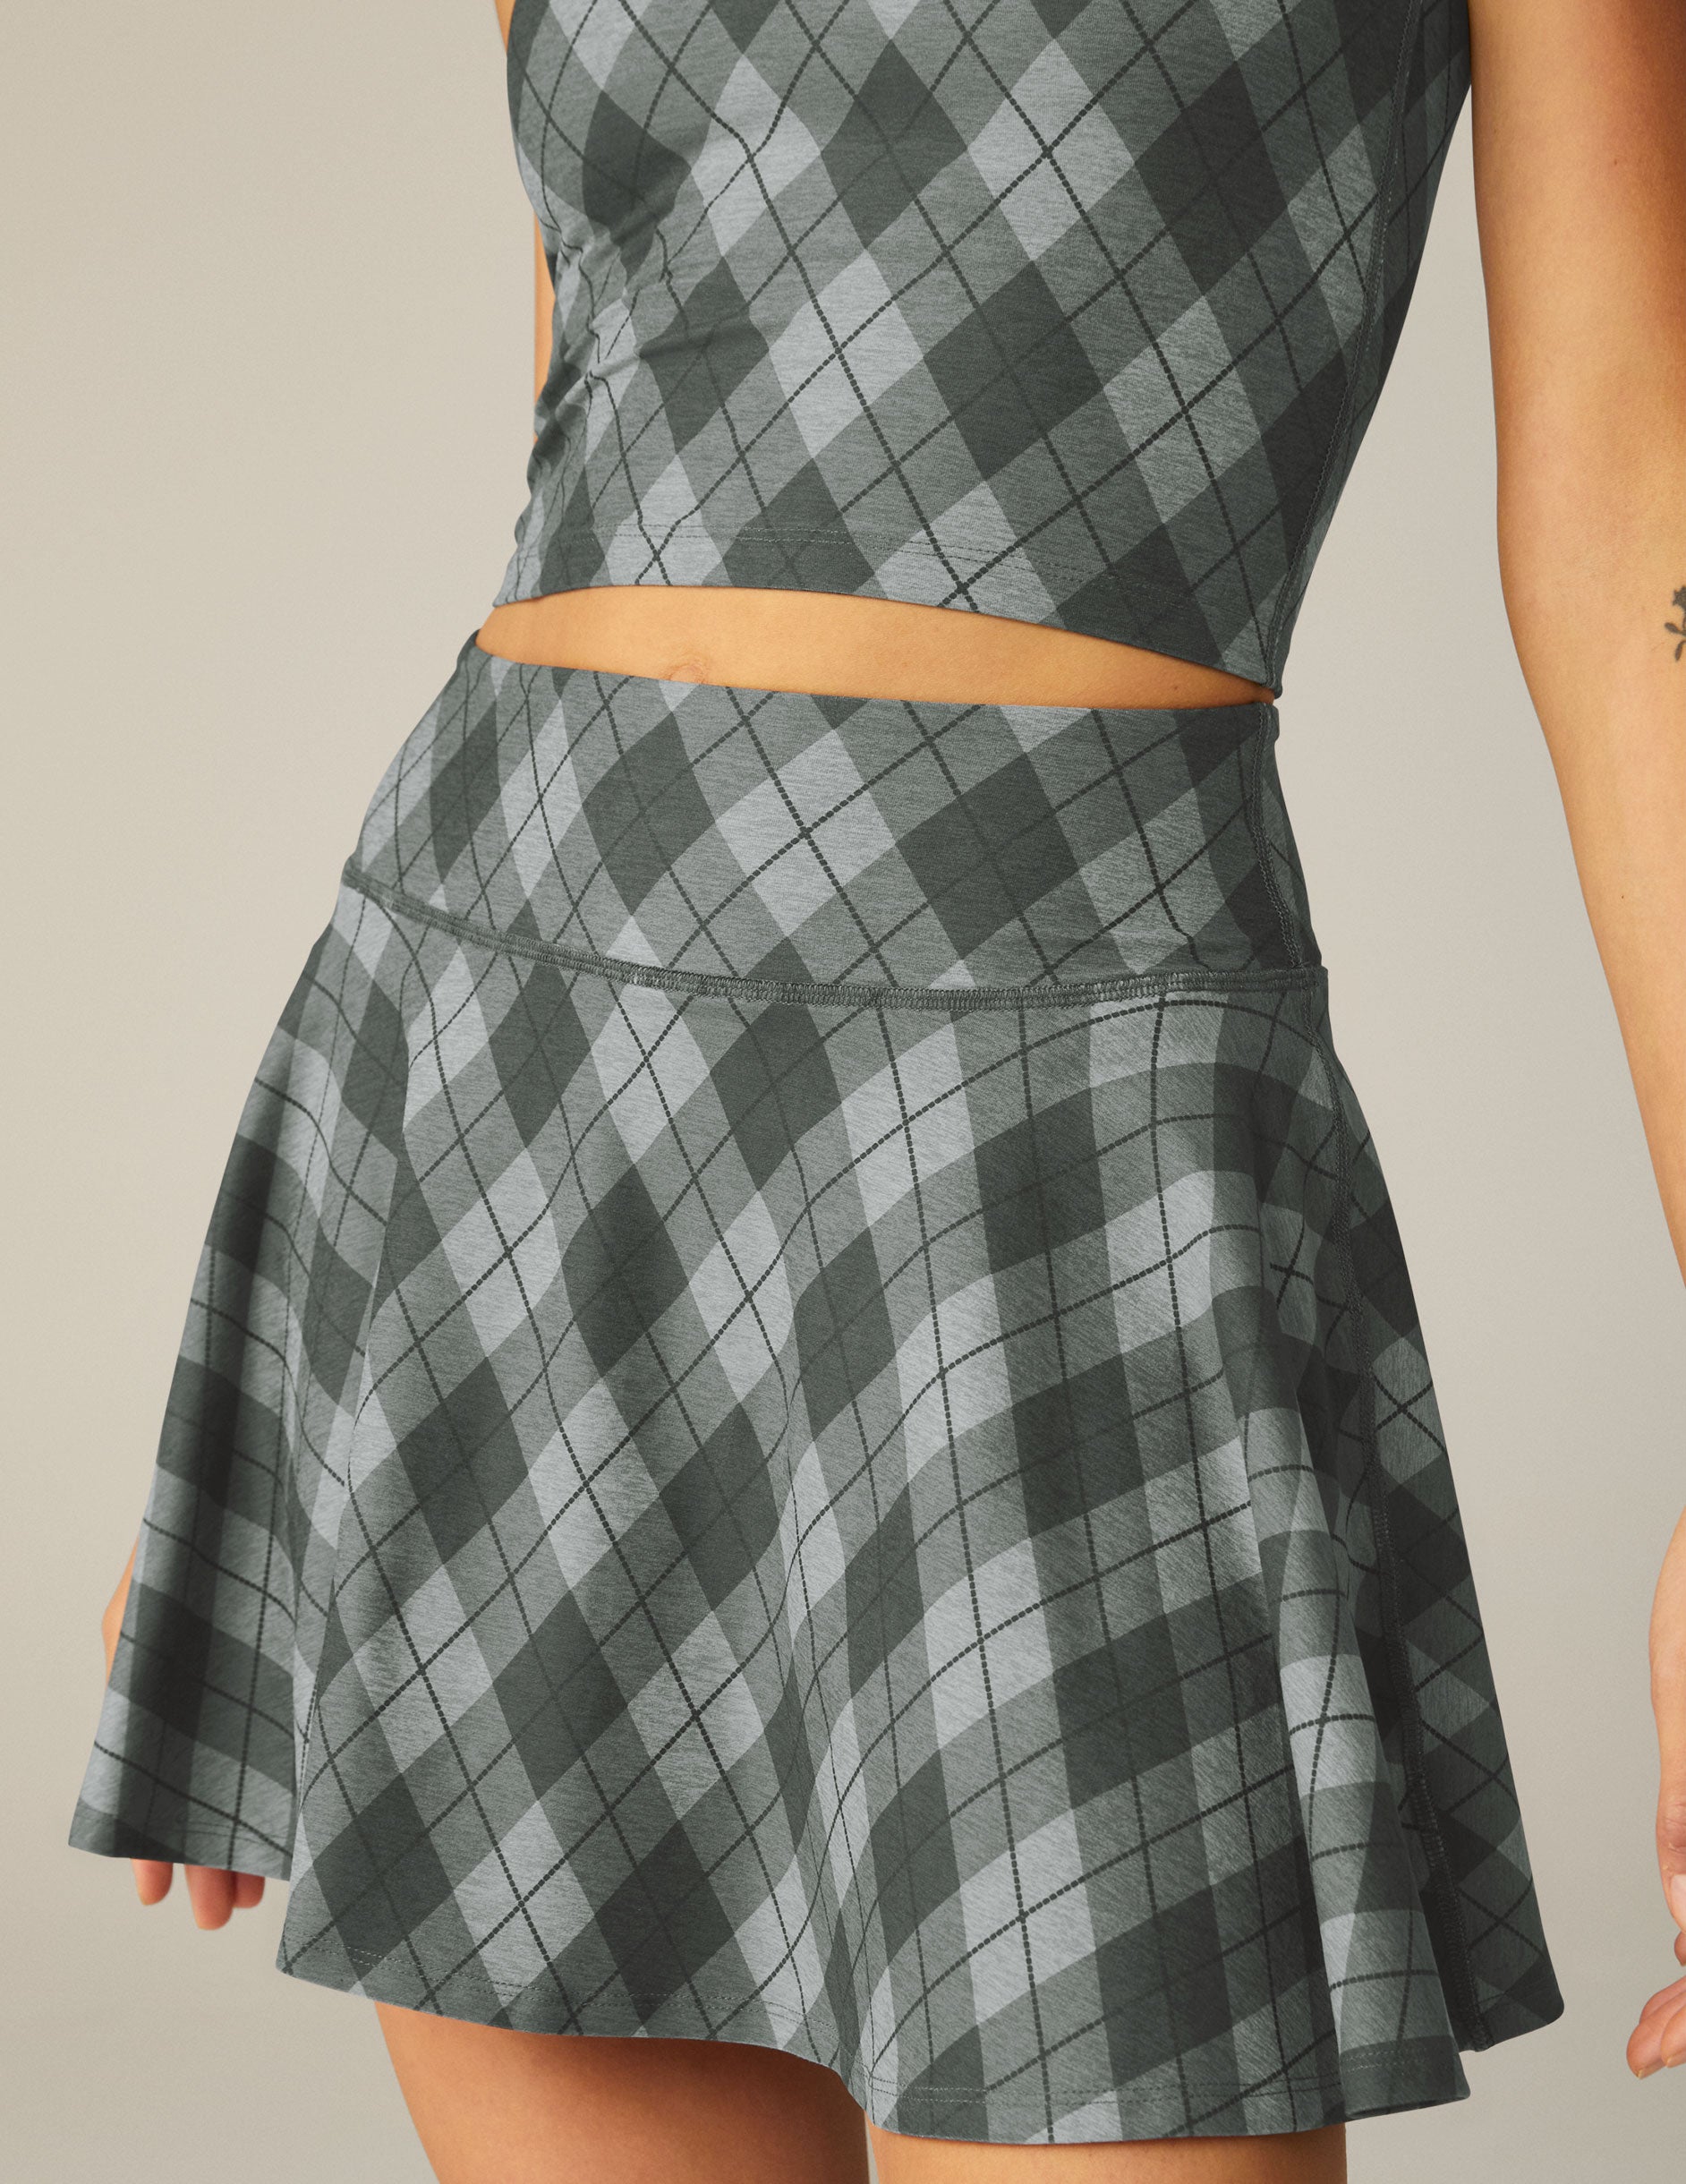 gray plaid design mini skirt